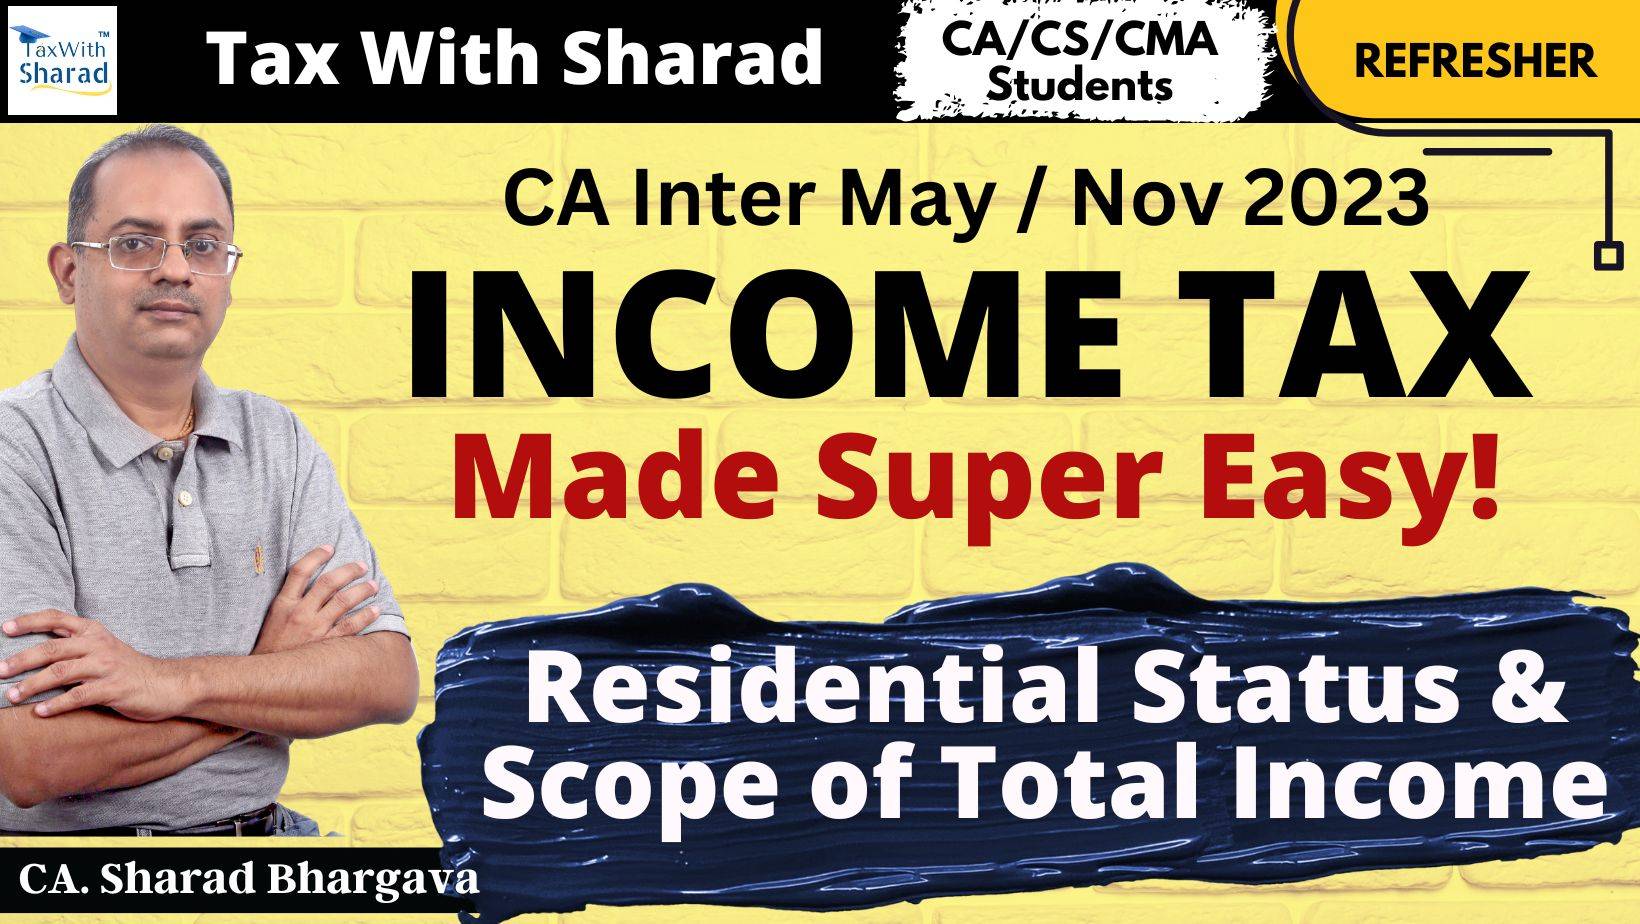 Refresher (DT) / Residential Status & Scope of TI / CA Inter May/Nov 2023 / CA. Sharad Bhargava